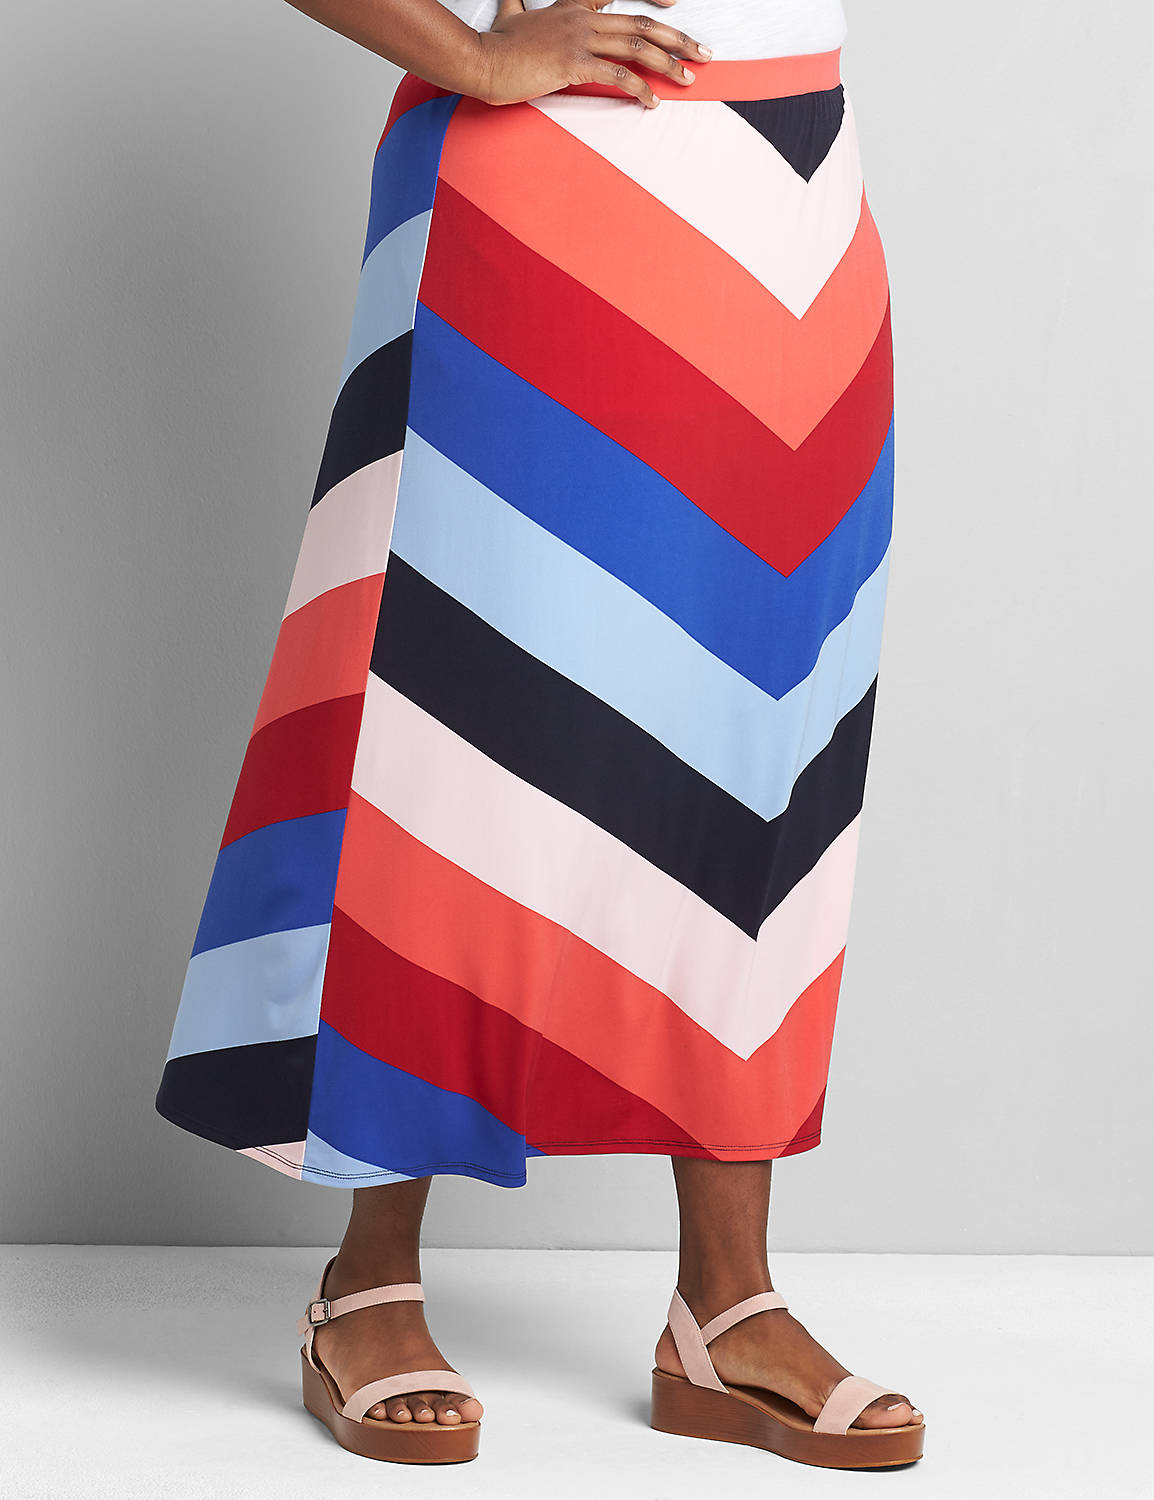 Knit Kit Pull-On Chevron Maxi Skirt Product Image 3